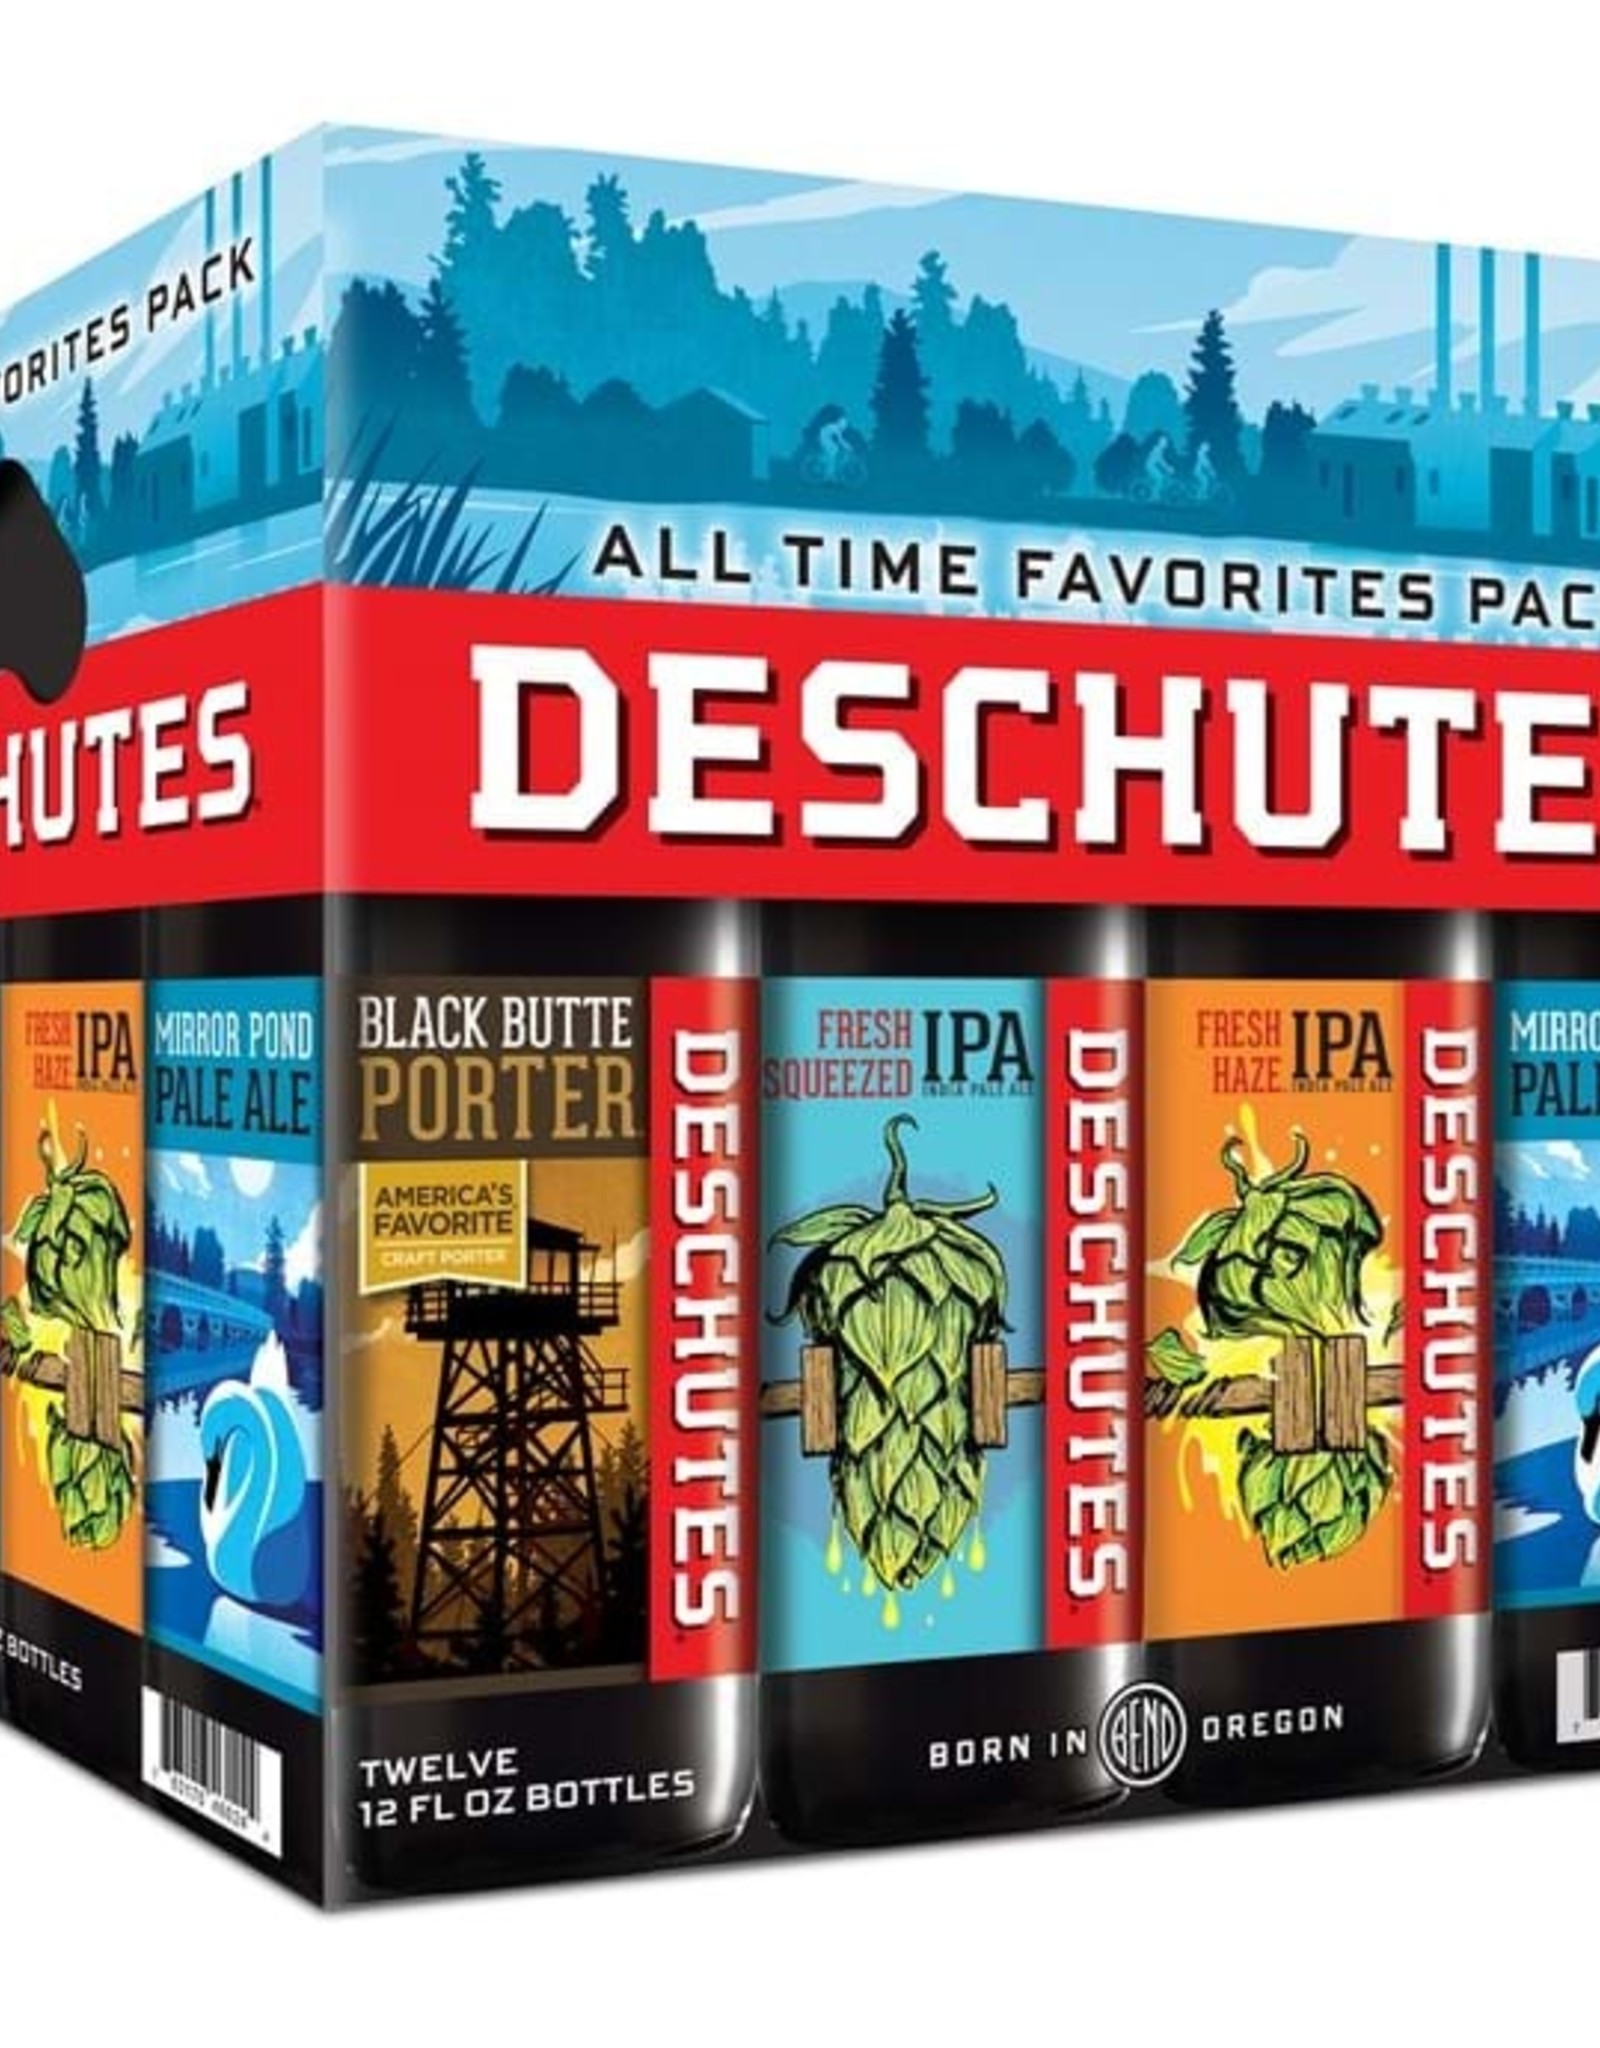 Deschutes Variety Pack 12x12 oz bottles